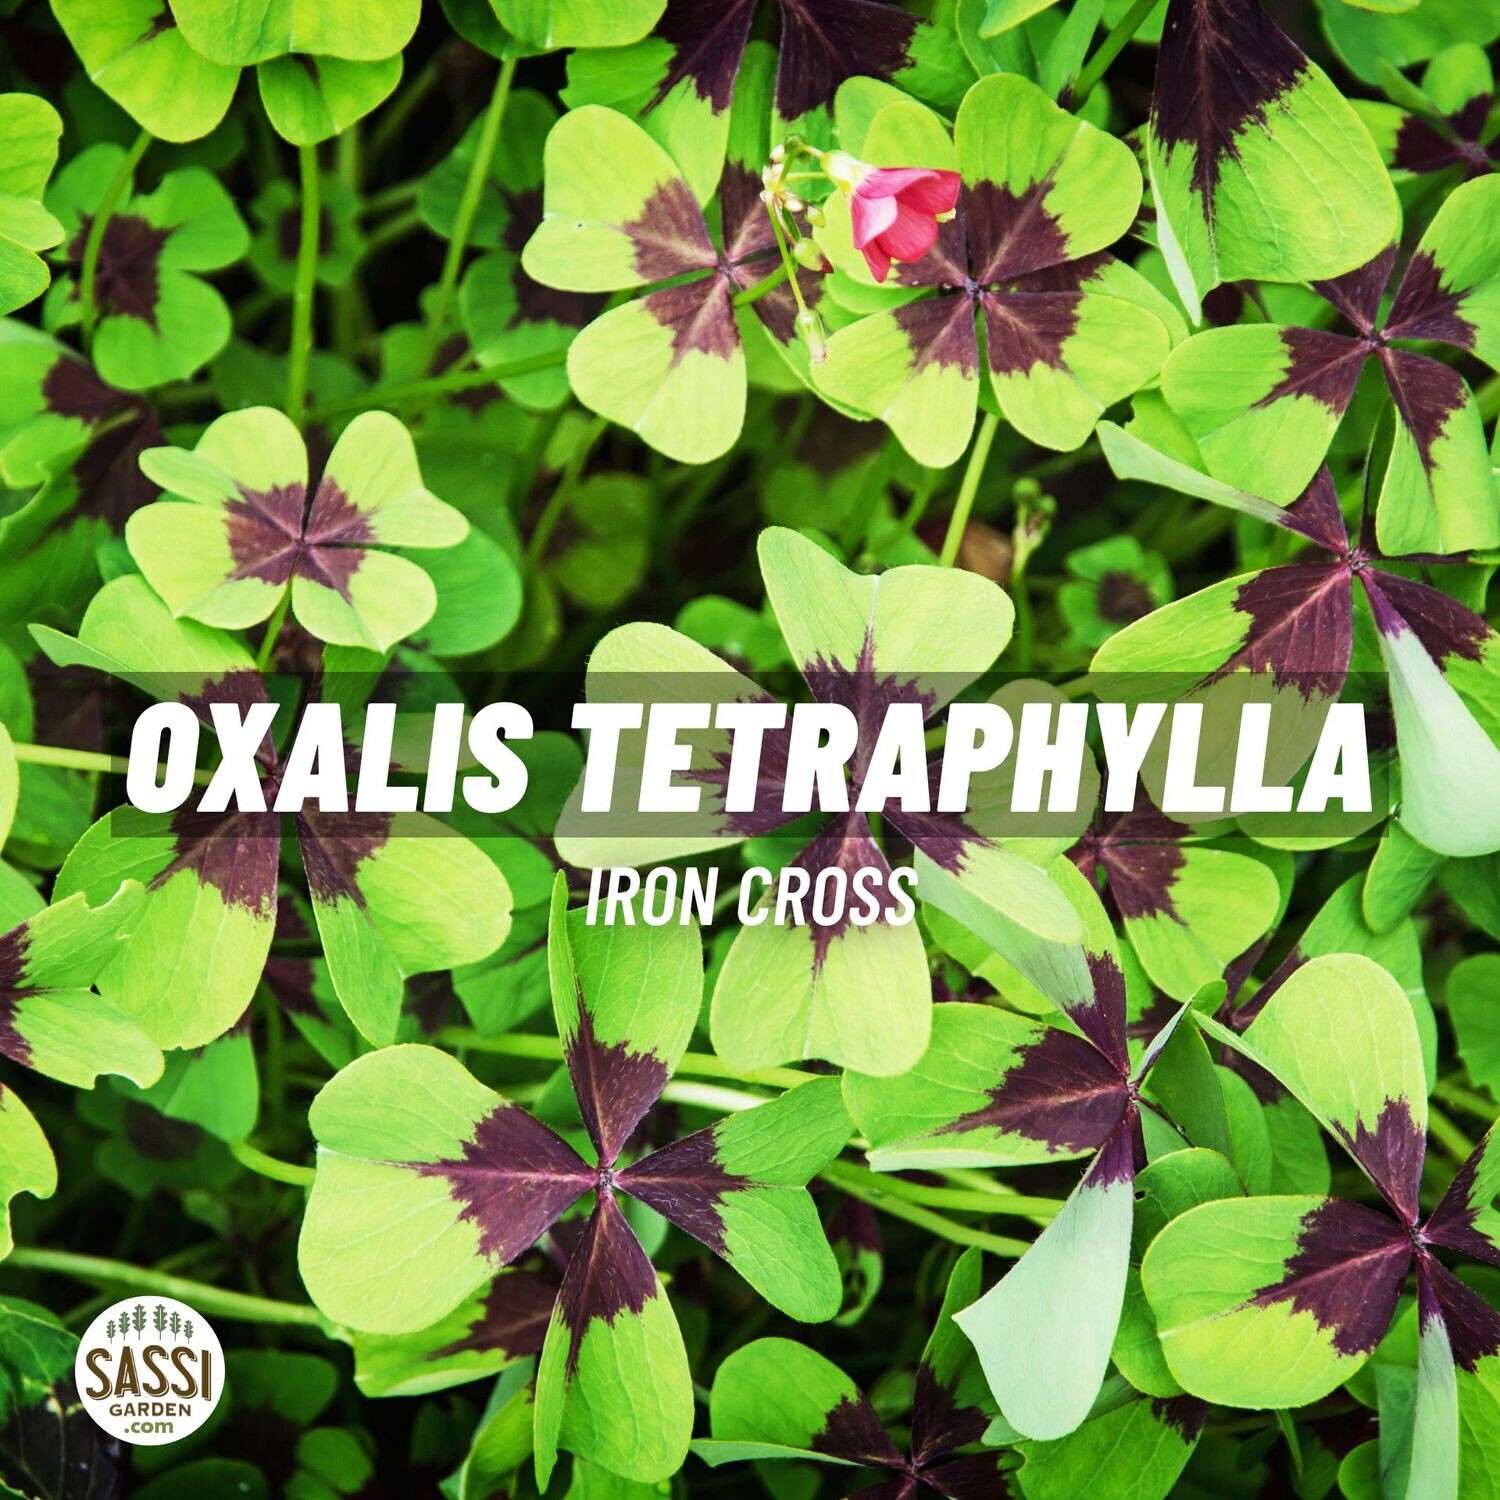 Oxalis tetraphylla “Iron Cross - vaso Ø10,5 cm Oxalis quadrifoglio fortunato